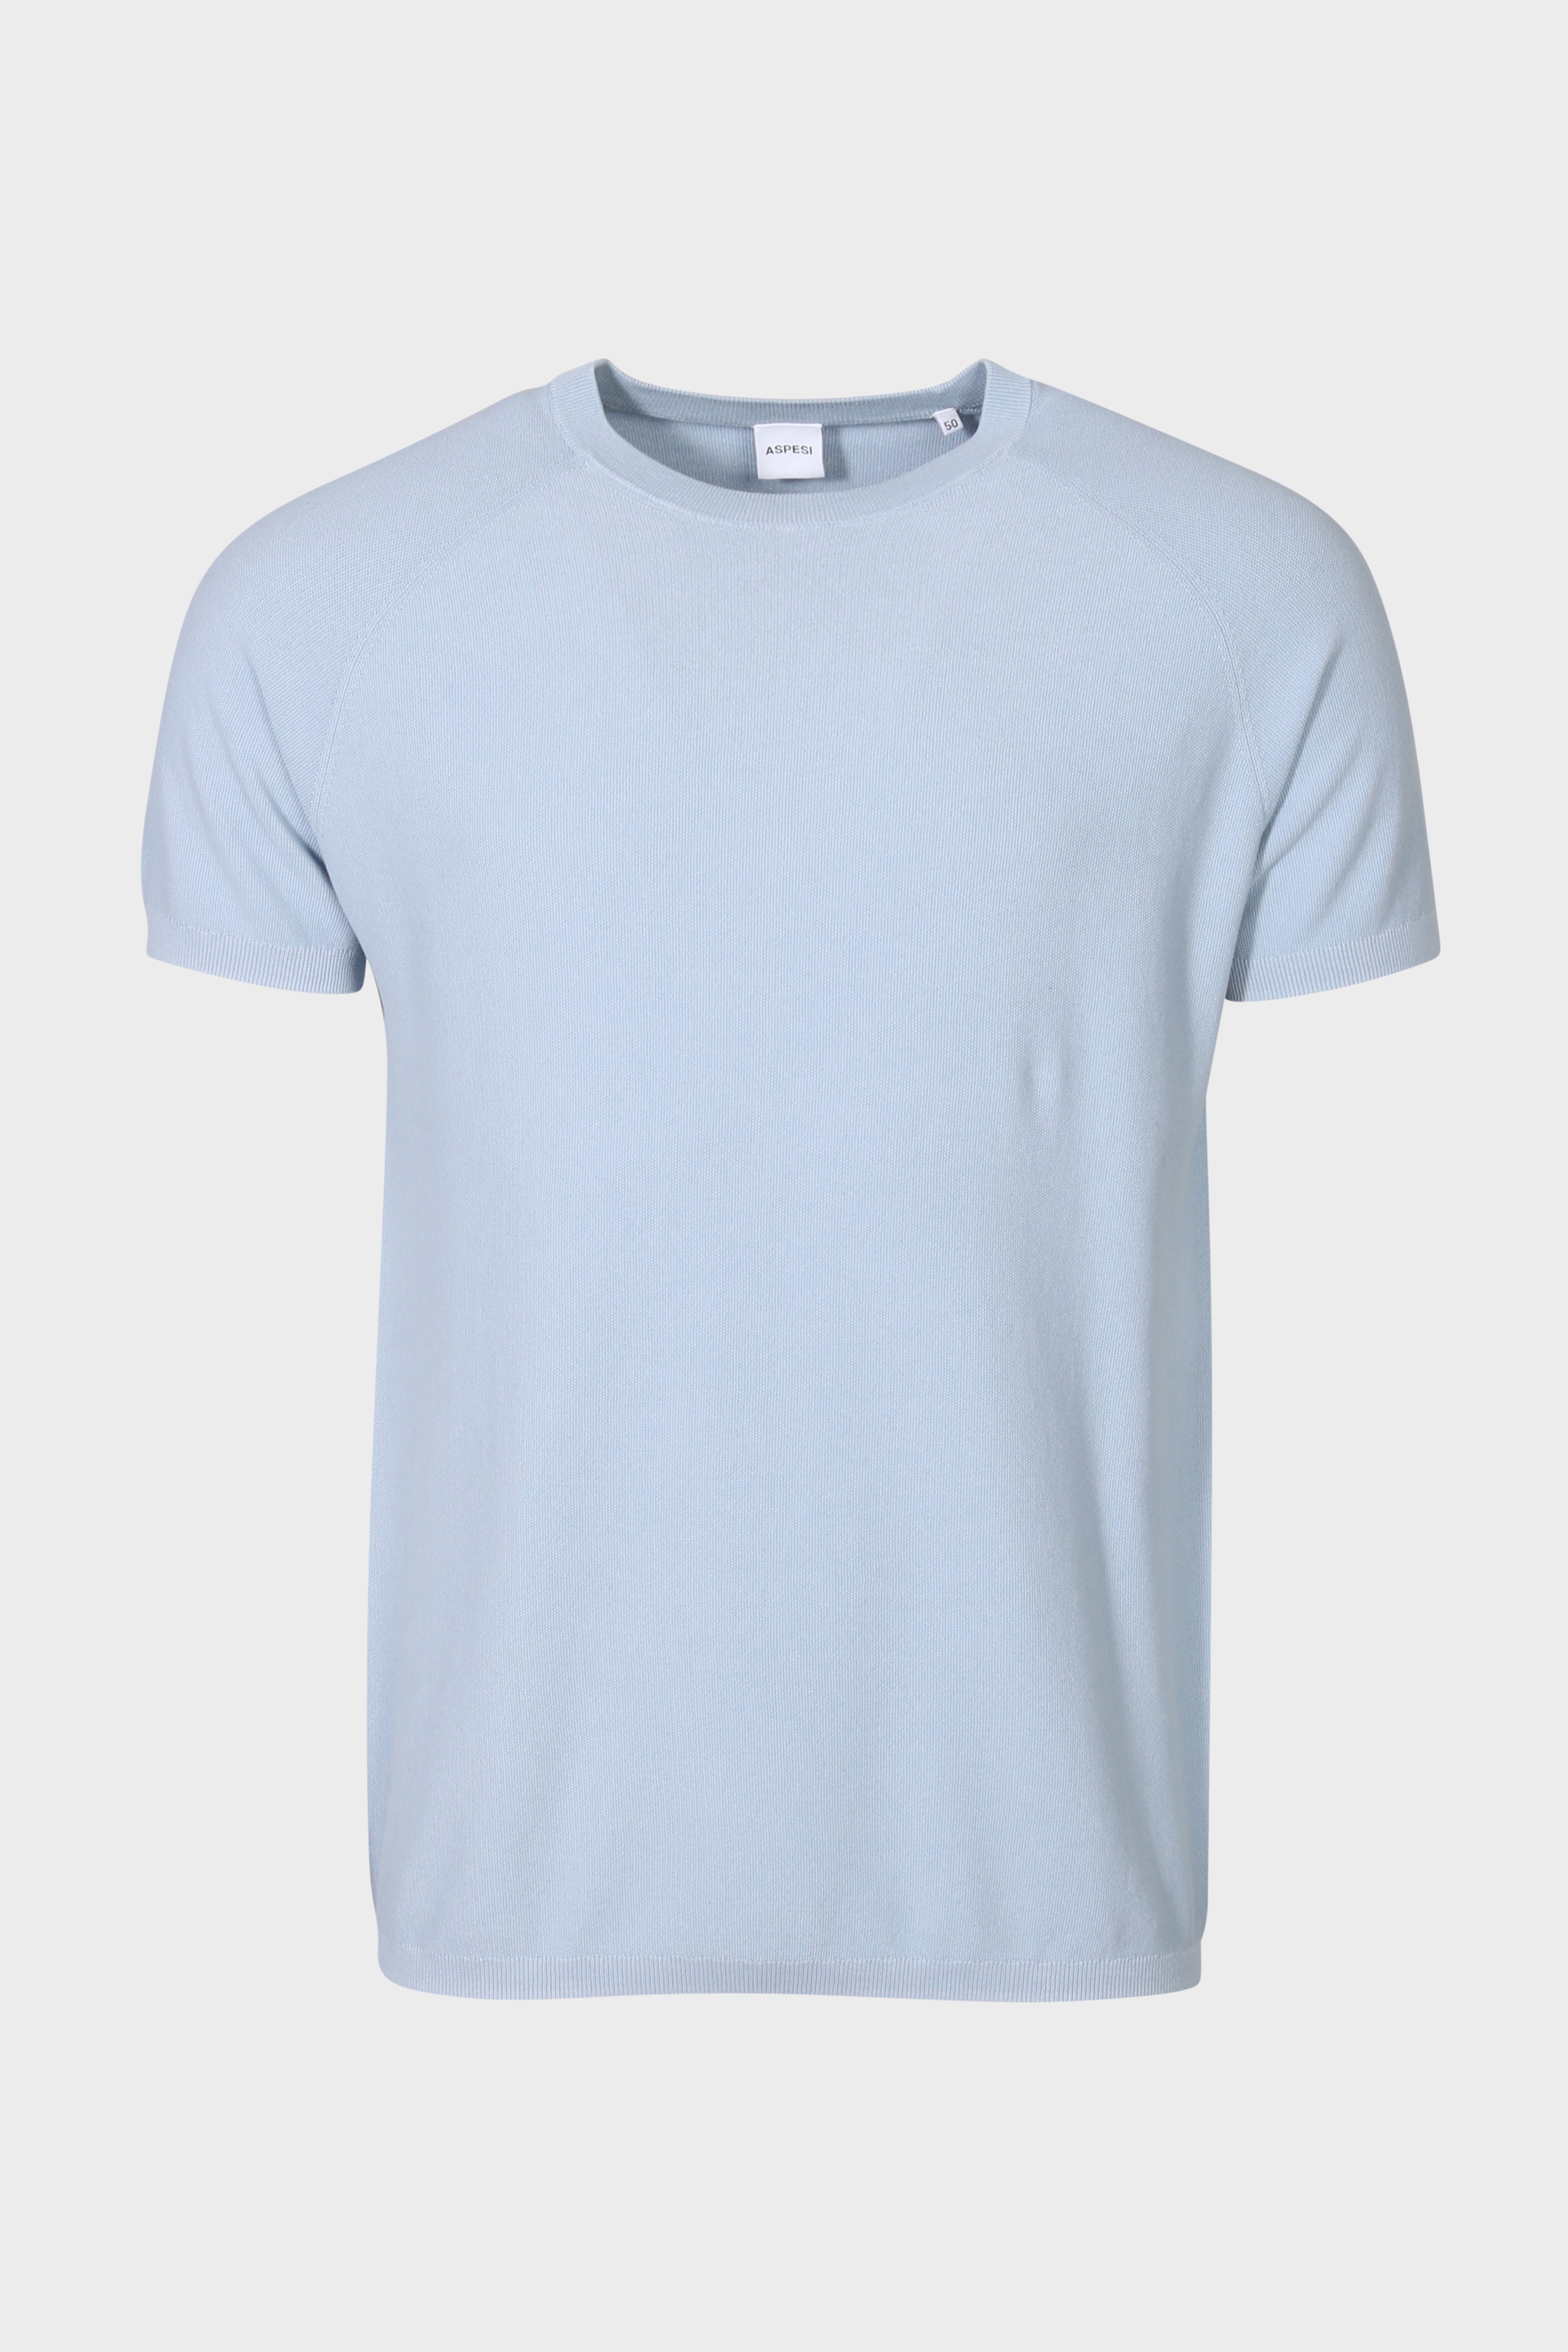 ASPESI Knit T-Shirt in Light Blue 50